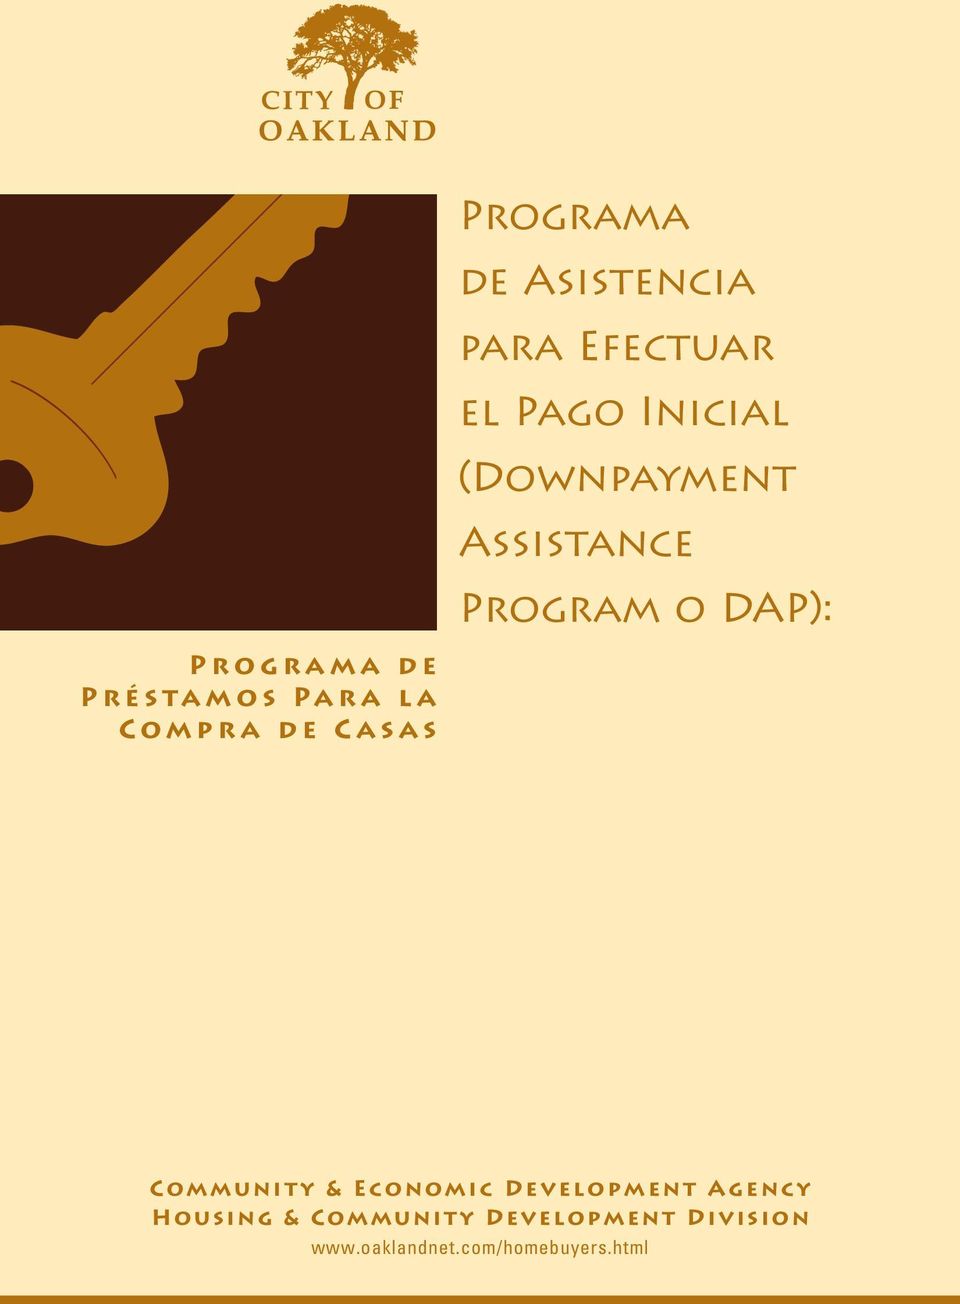 Assistance Program o DAP): Community & Economic Development